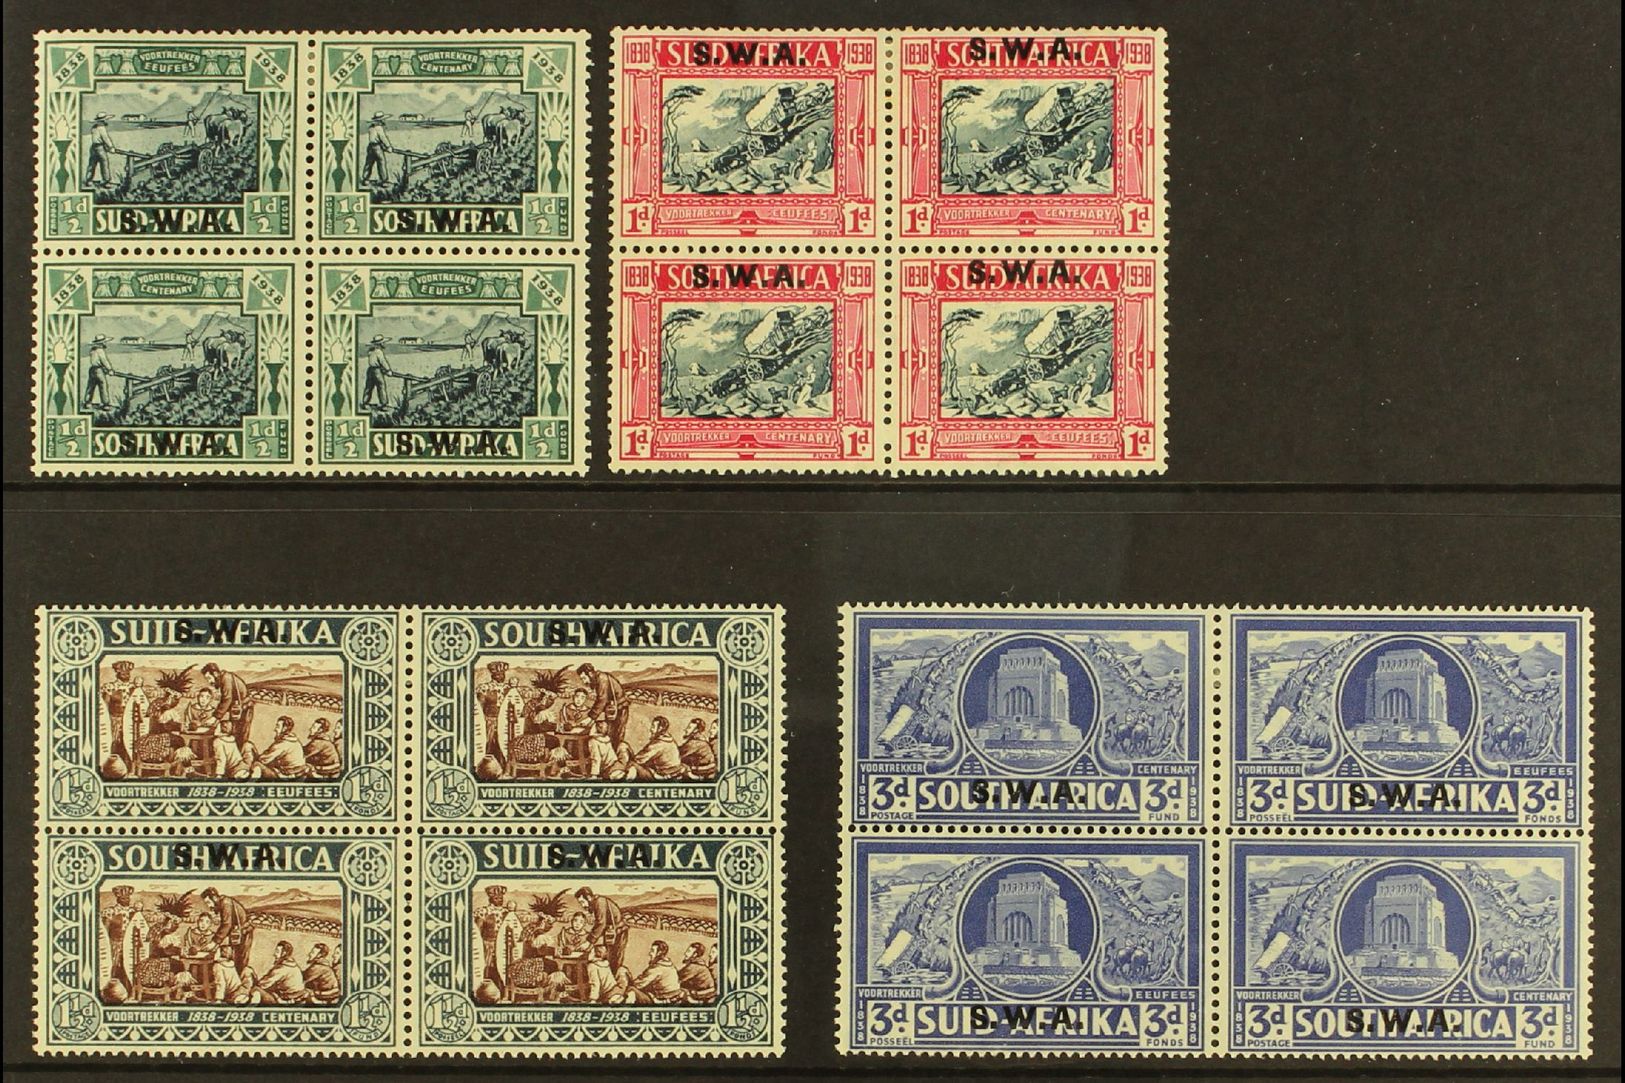 1938   Voortrekker Centenary Memorial Set, SG 105/108 In Fine Mint/NHM Blocks Of 4, The Lower Stamps In Each Block Being - África Del Sudoeste (1923-1990)